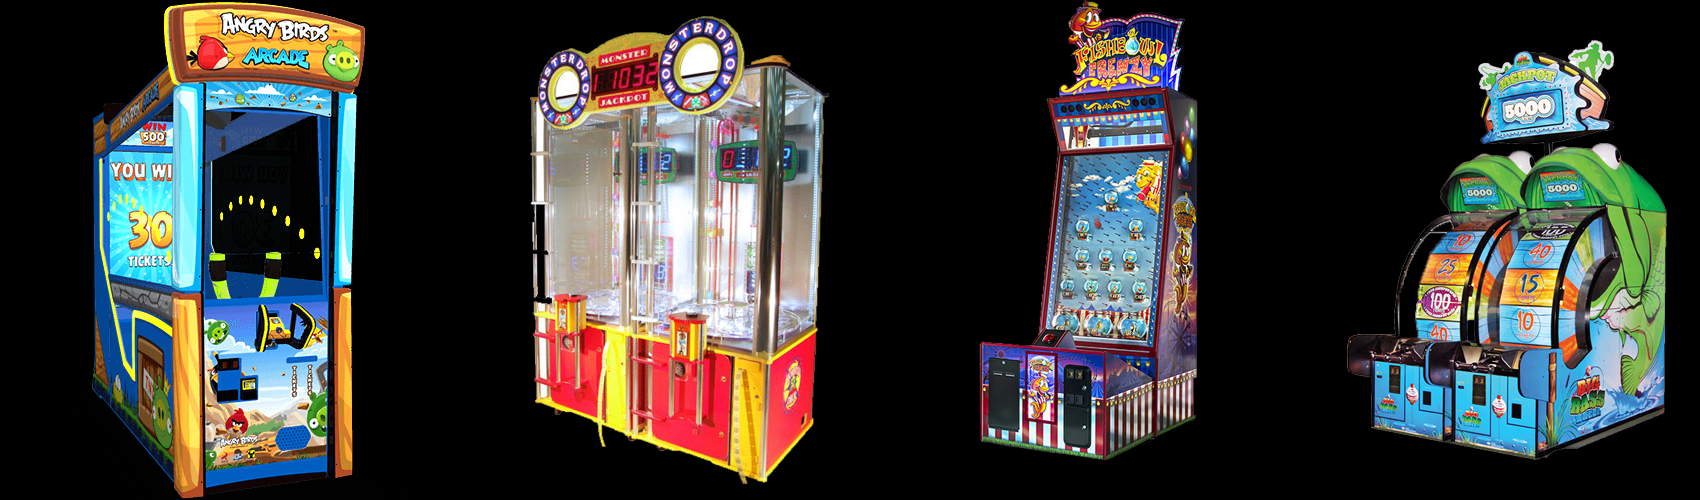 Redemption Arcade Games in Las Vegas